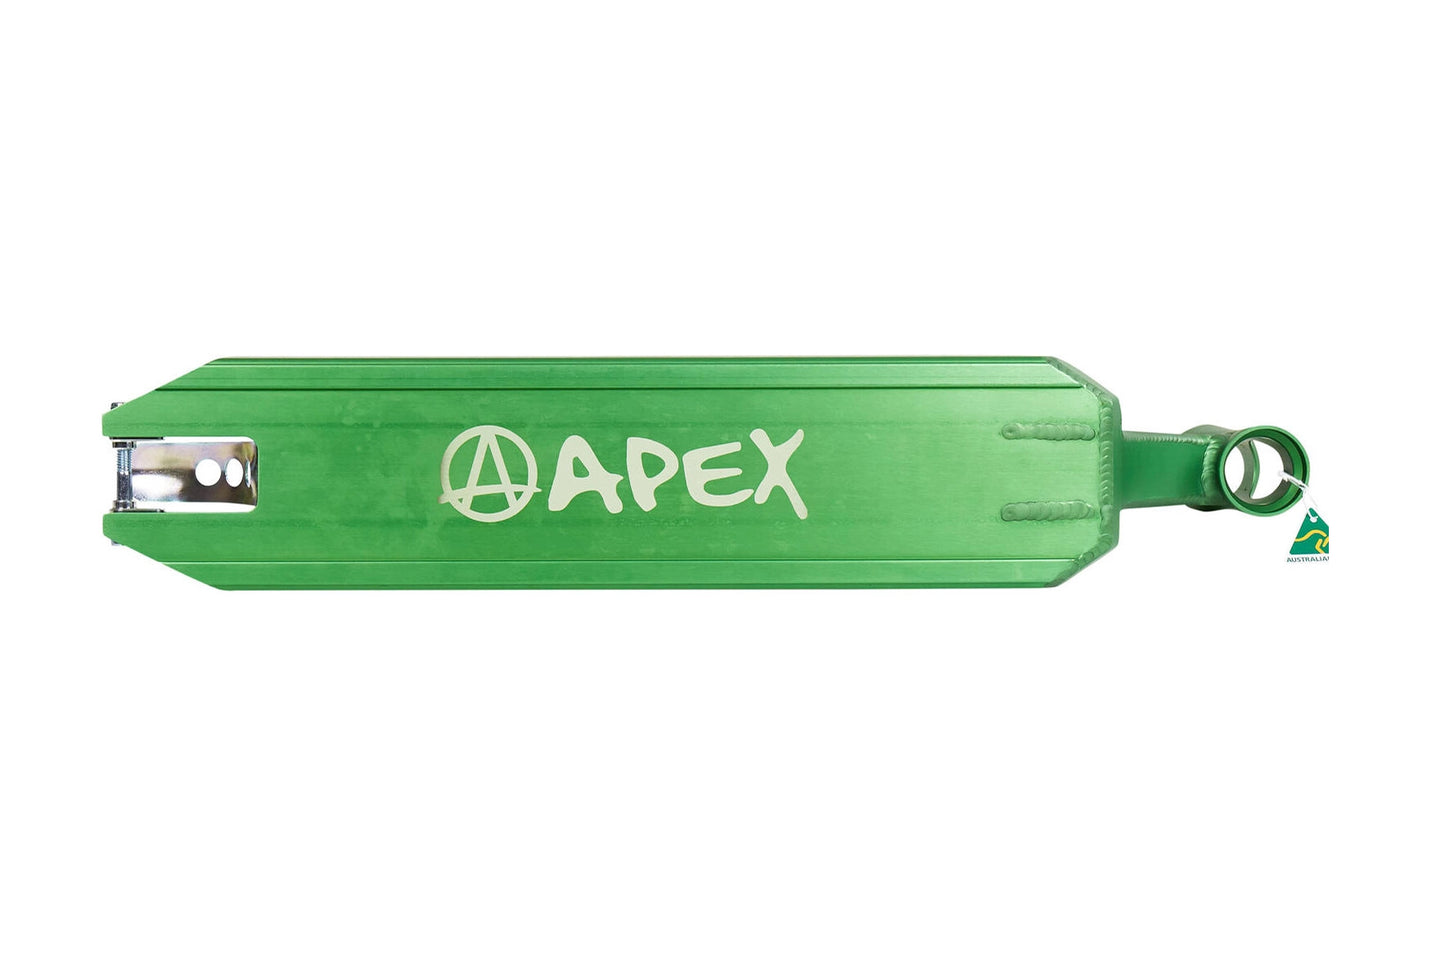 apex-deck-green-trottinette-scooter